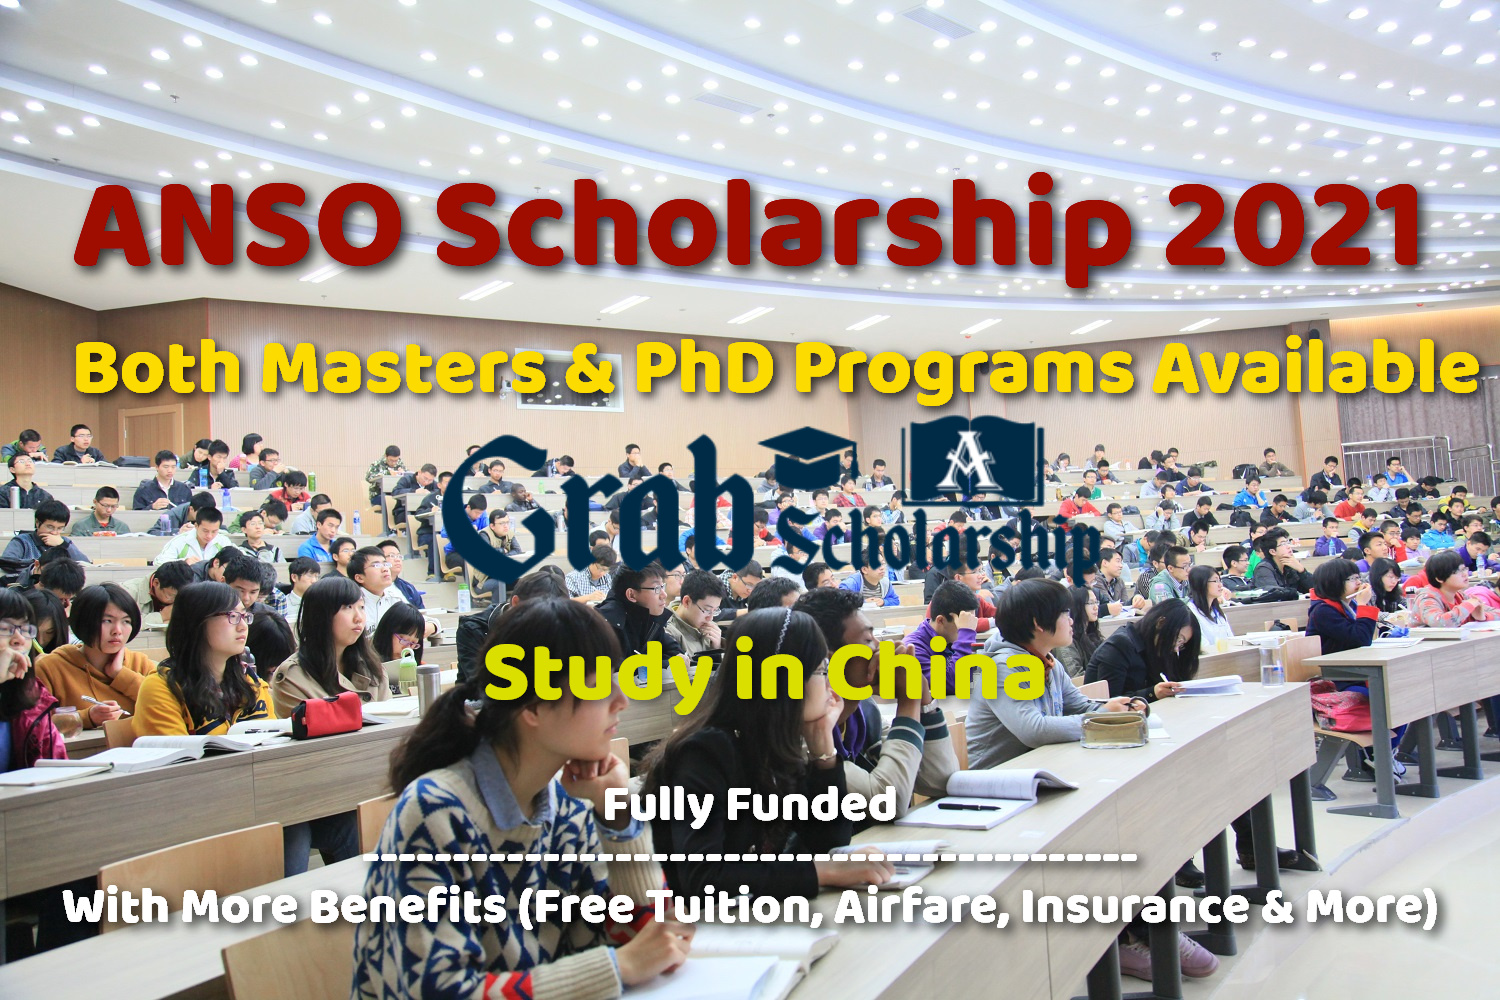 Anso scholarship 2021